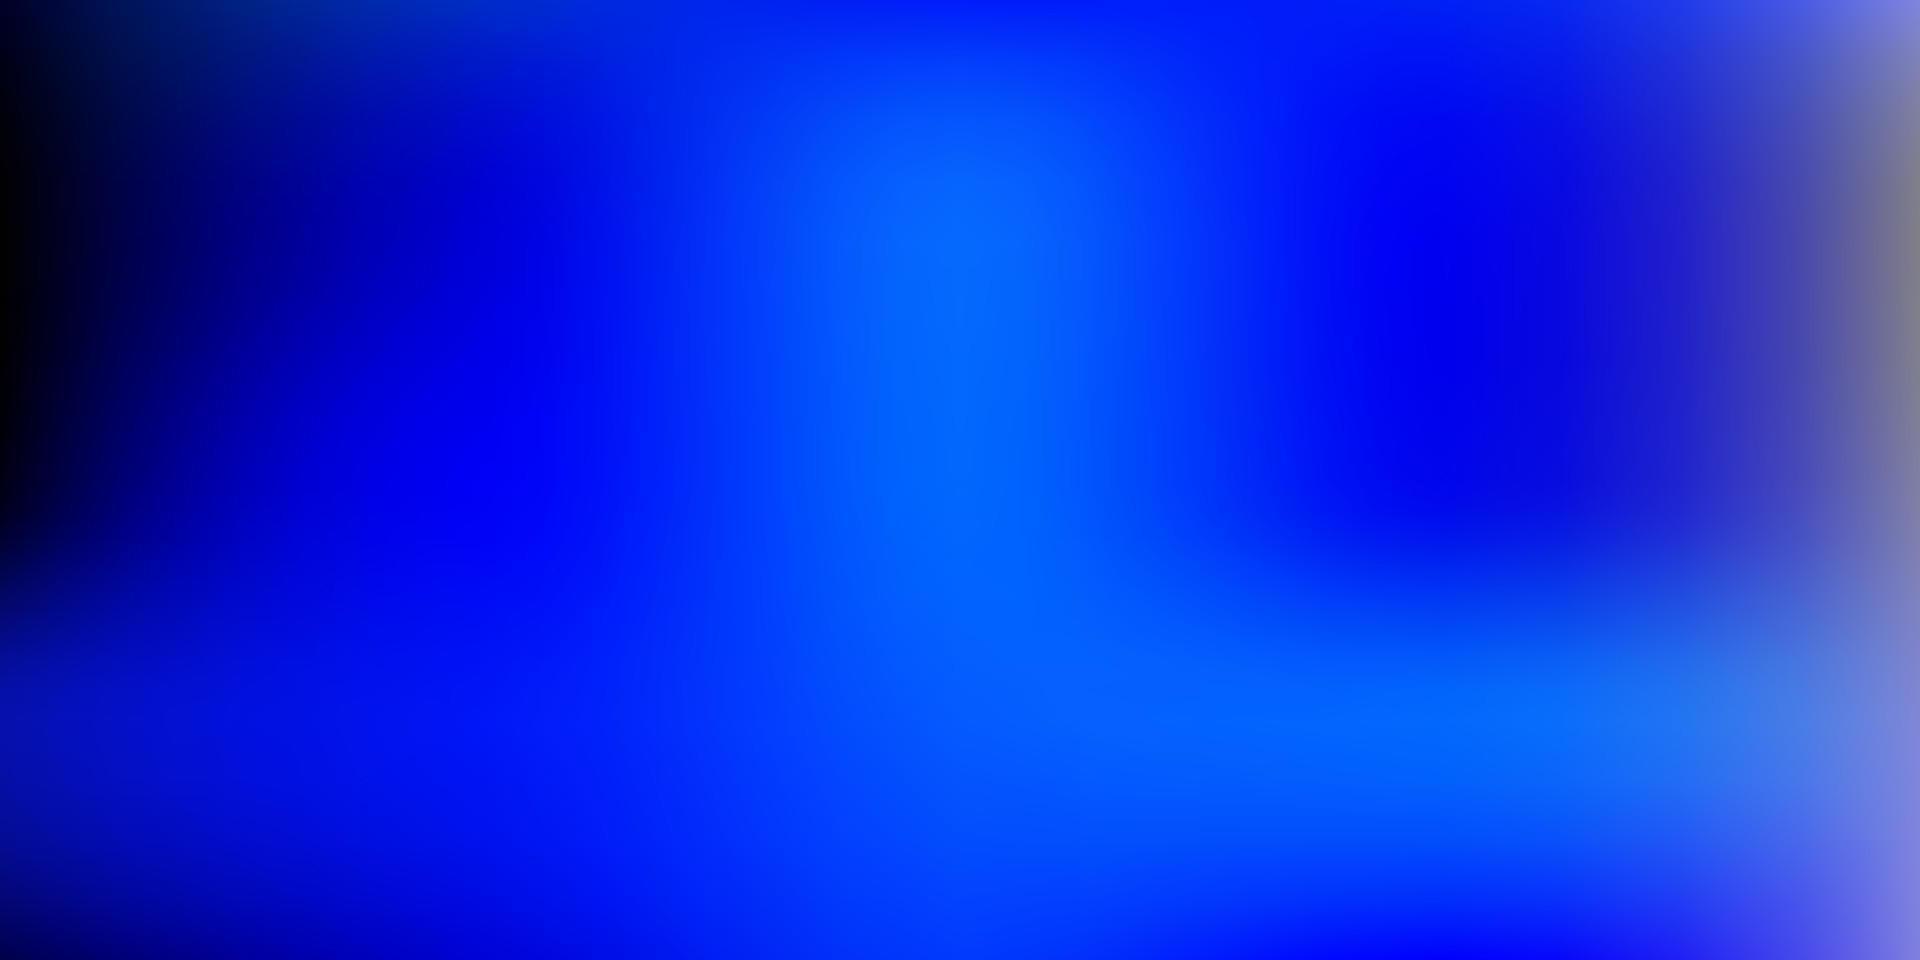 sfondo sfocato sfumato vettoriale blu chiaro.